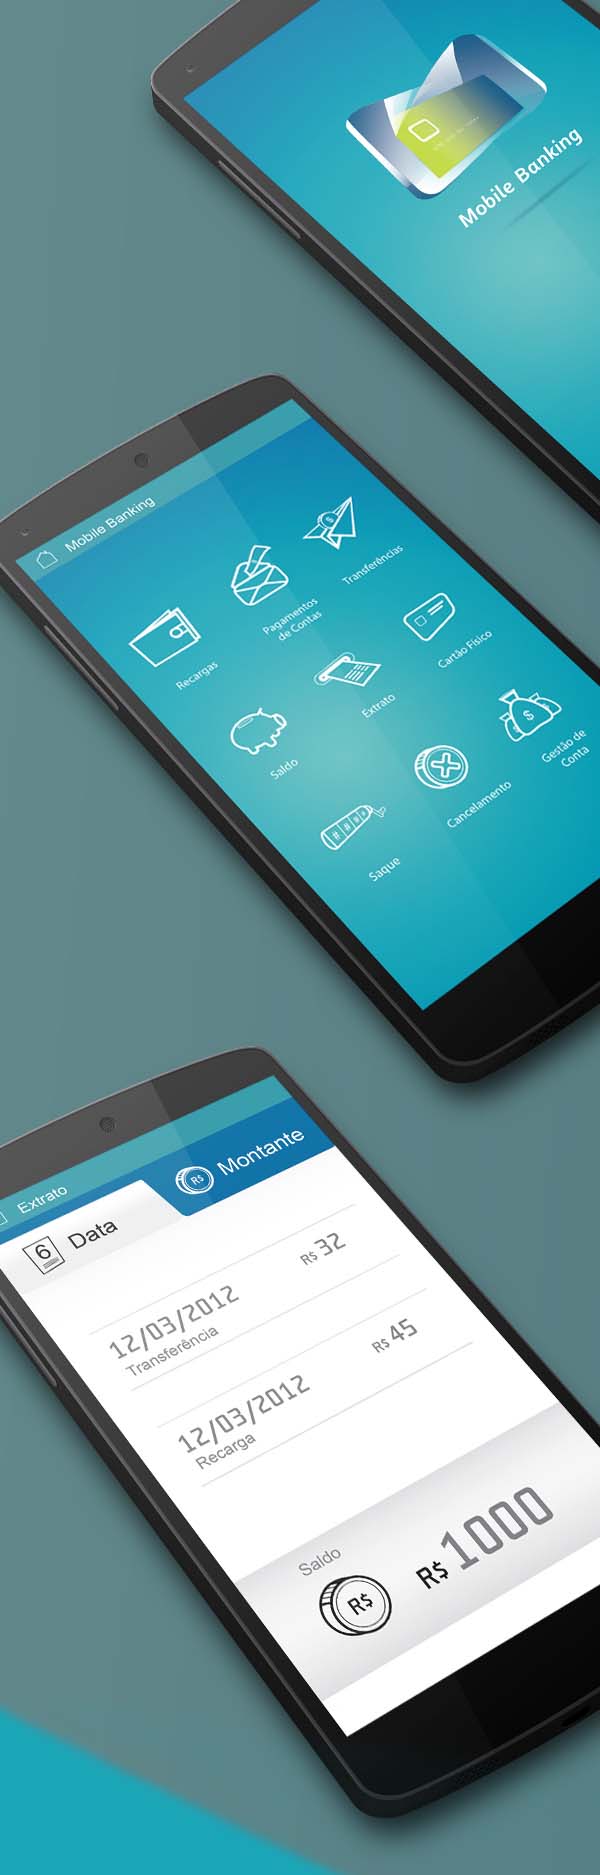 Mobile UI | Mobile Banking